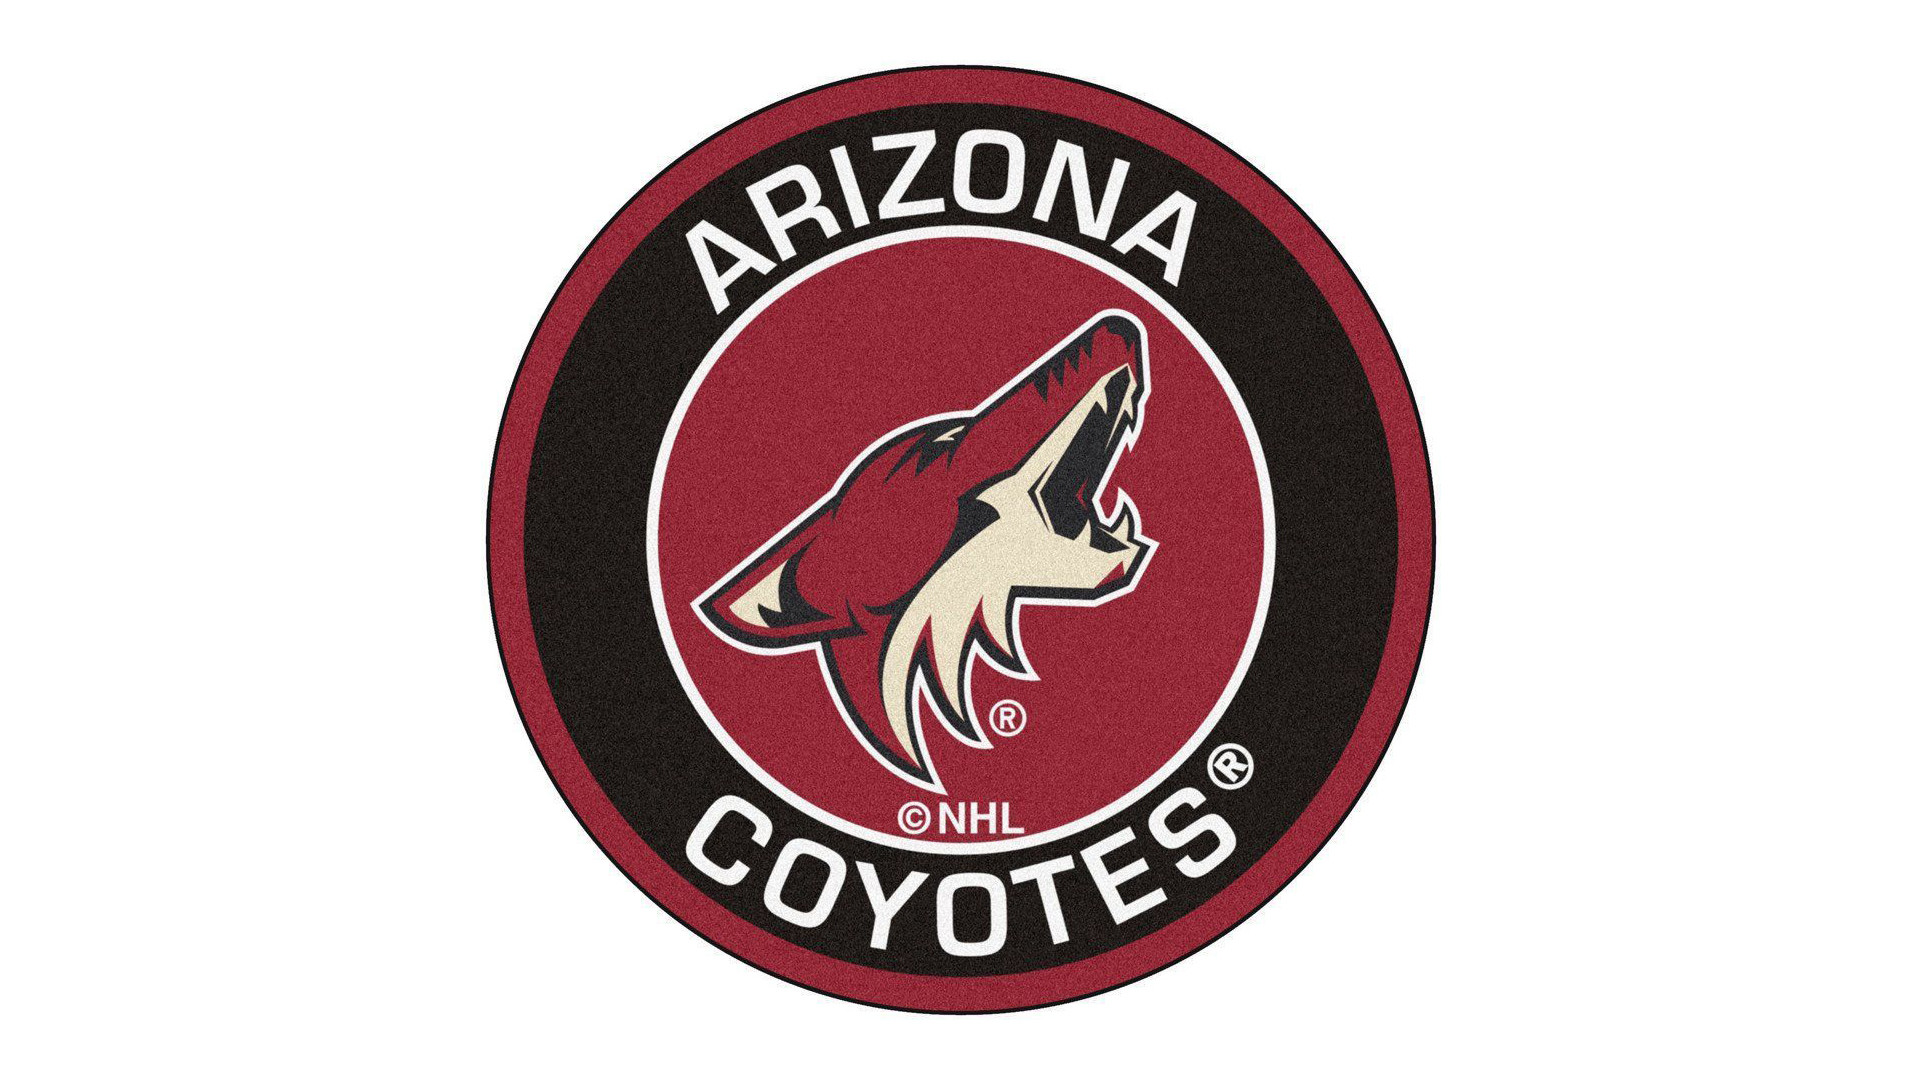 2023 Arizona Coyotes wallpaper – Pro Sports Backgrounds